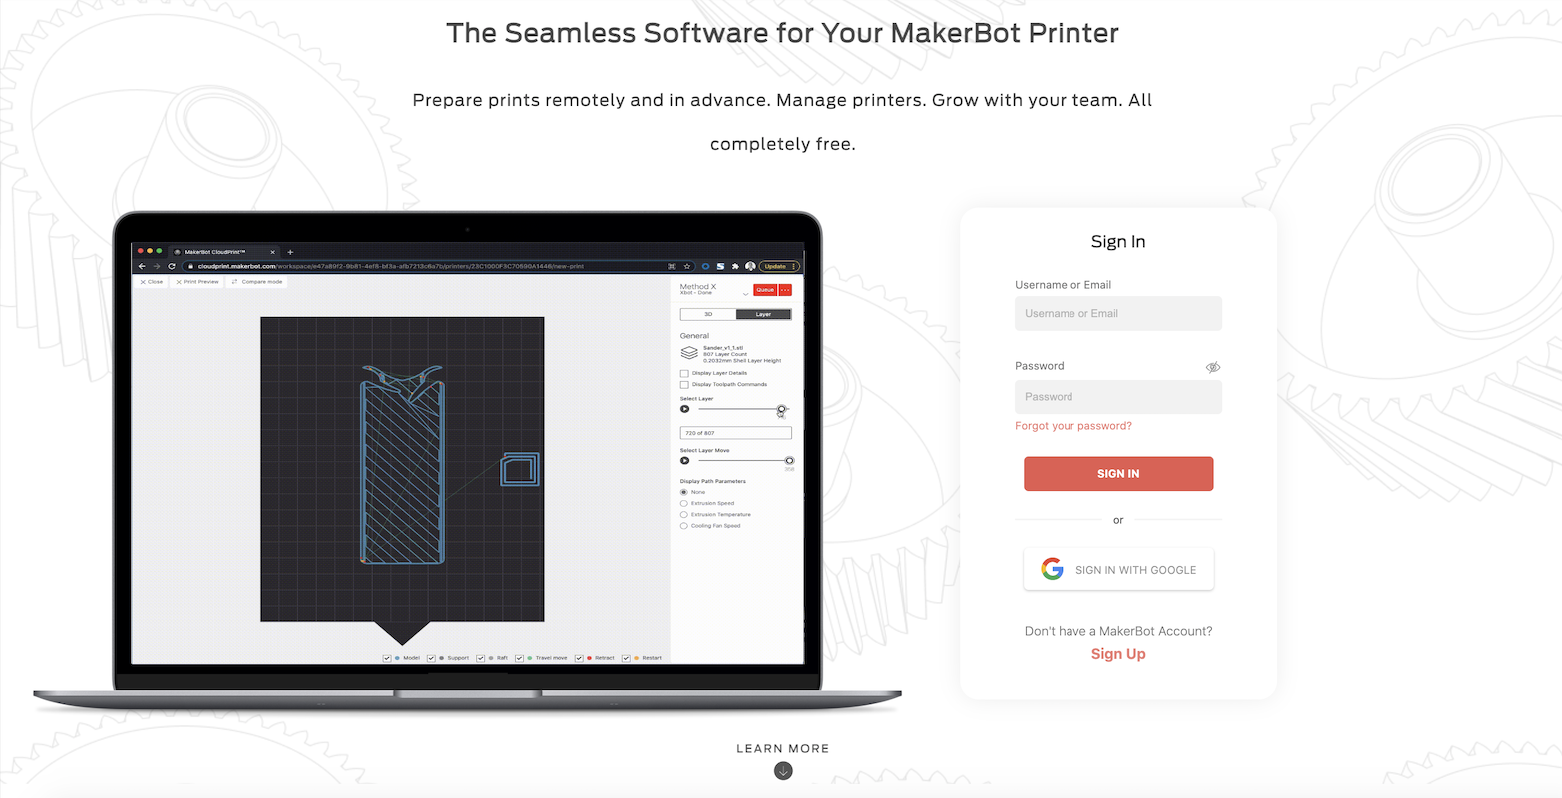 CloudPrint - MakerBot